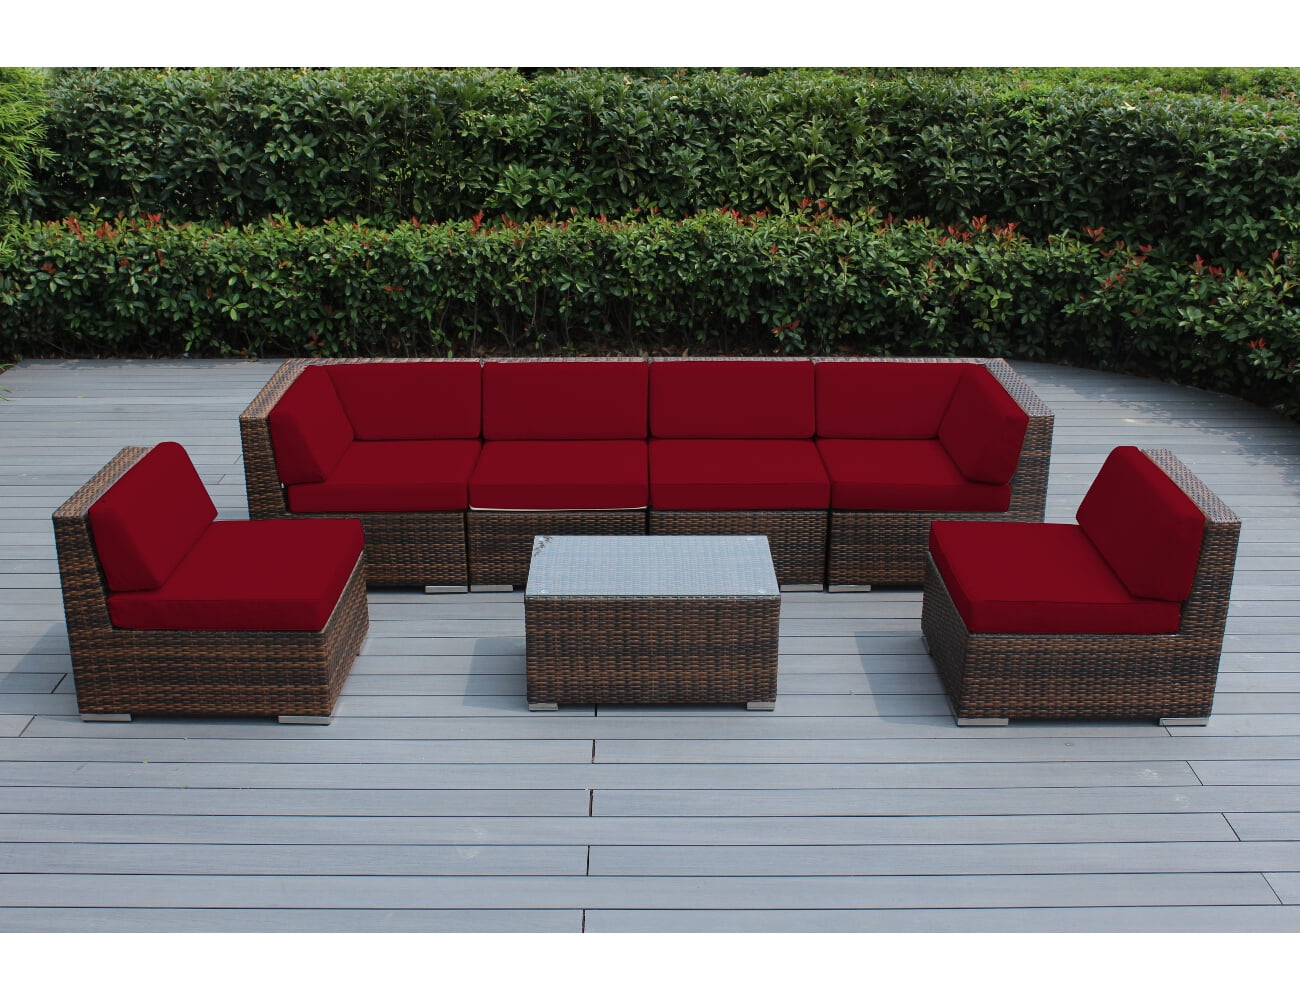 Ohana 7 Piece Outdoor Wicker Patio Furniture Sectional Conversation Set - Mixed Brown Wicker